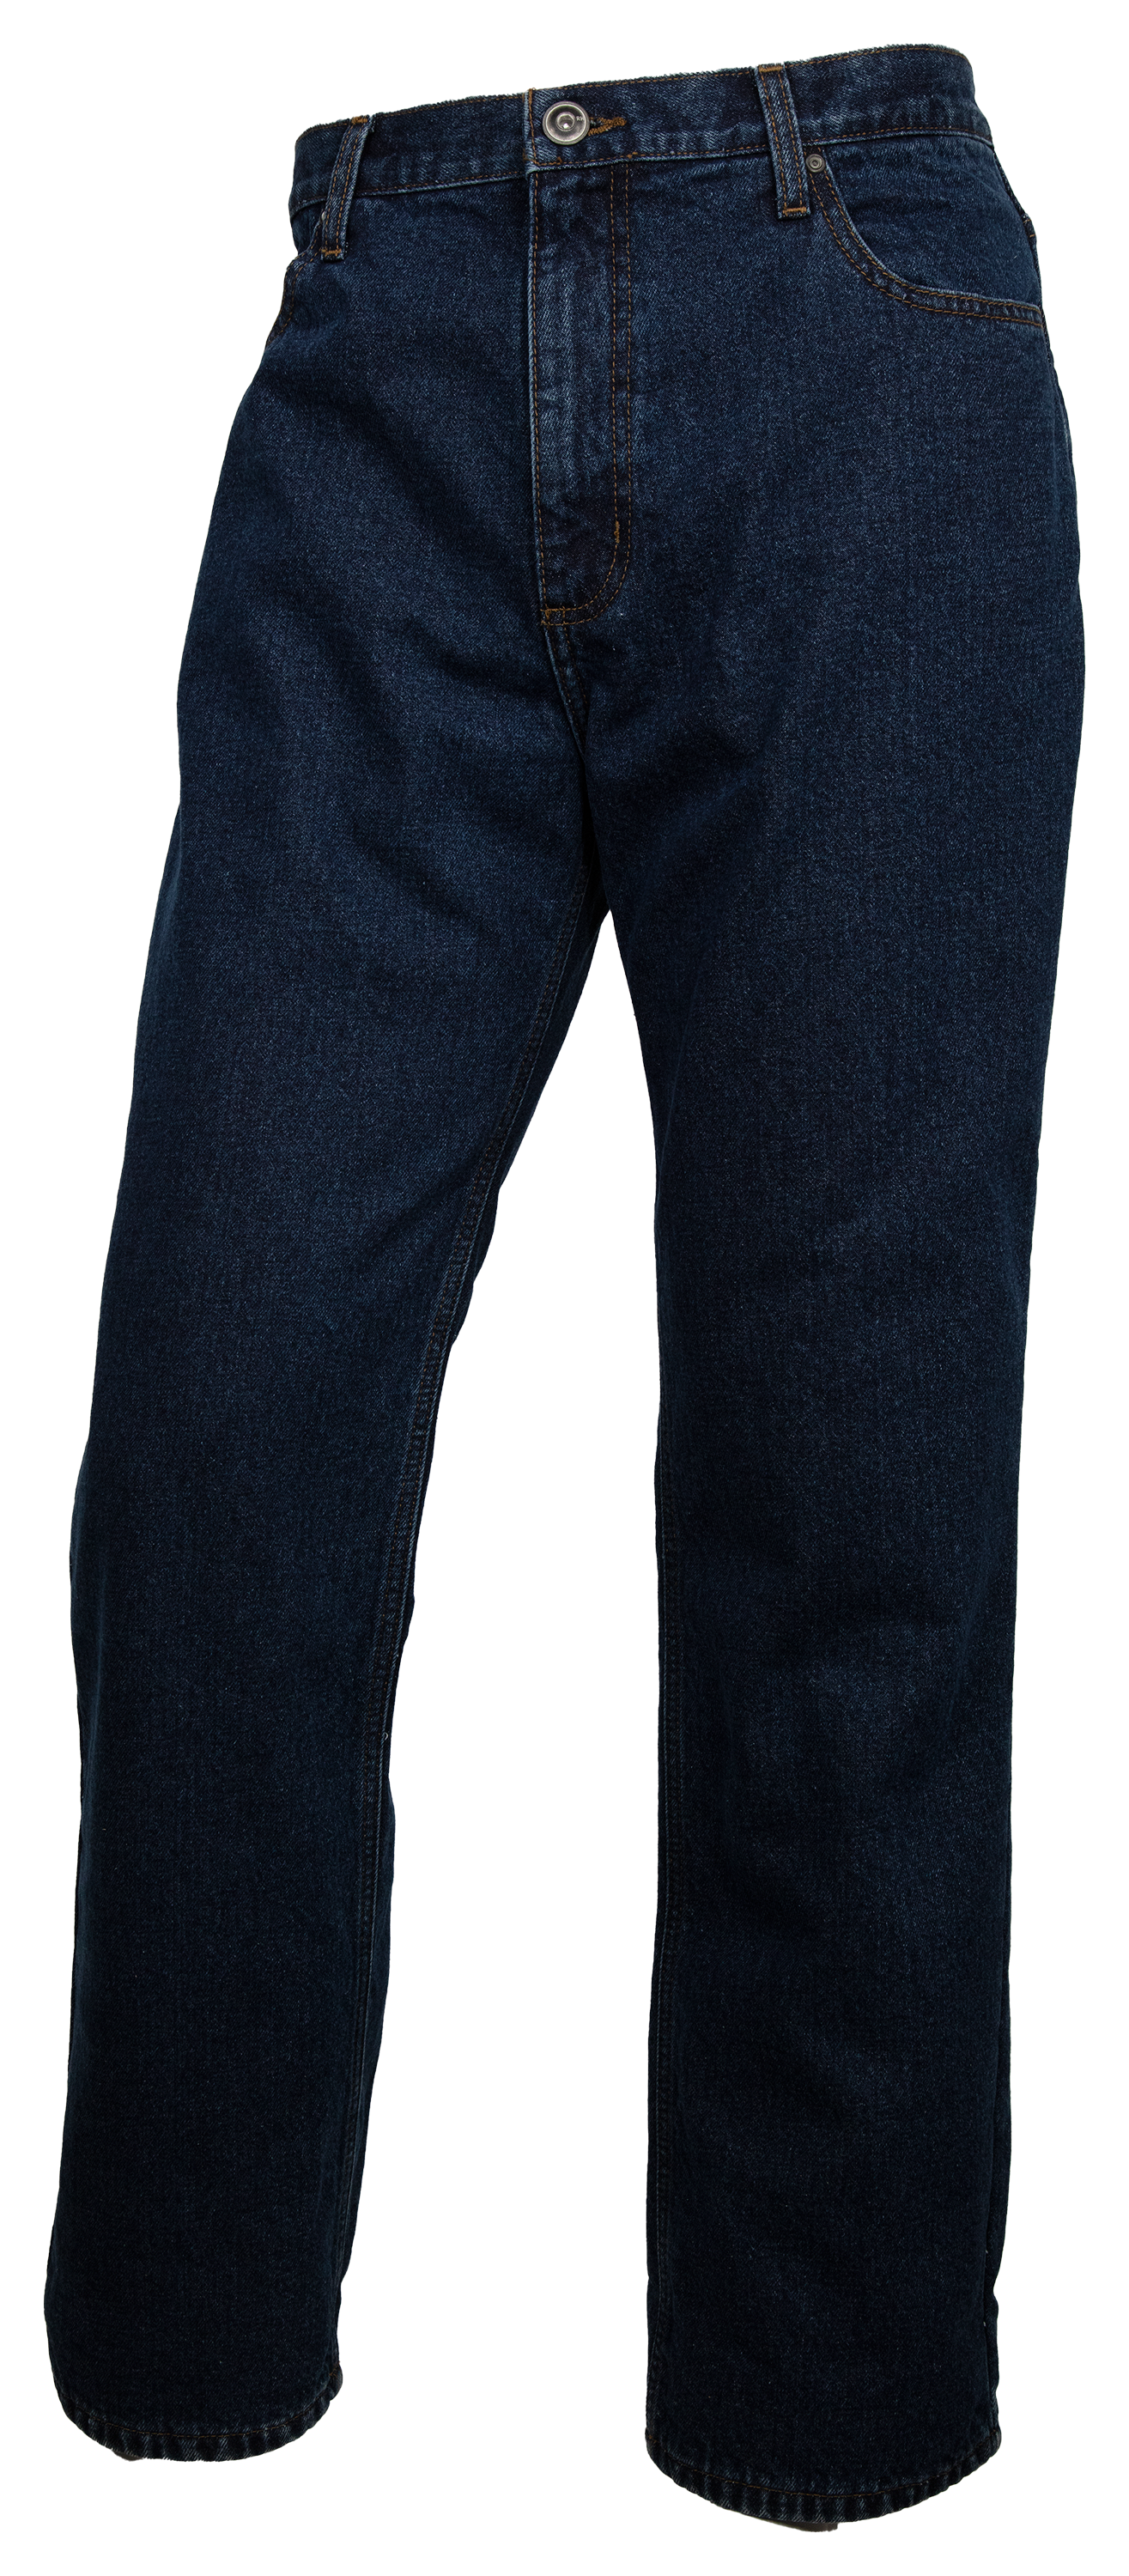 Redhead Flannel Lined Jeans 38x32 Dark Wash Warm Cozy Denim Pants